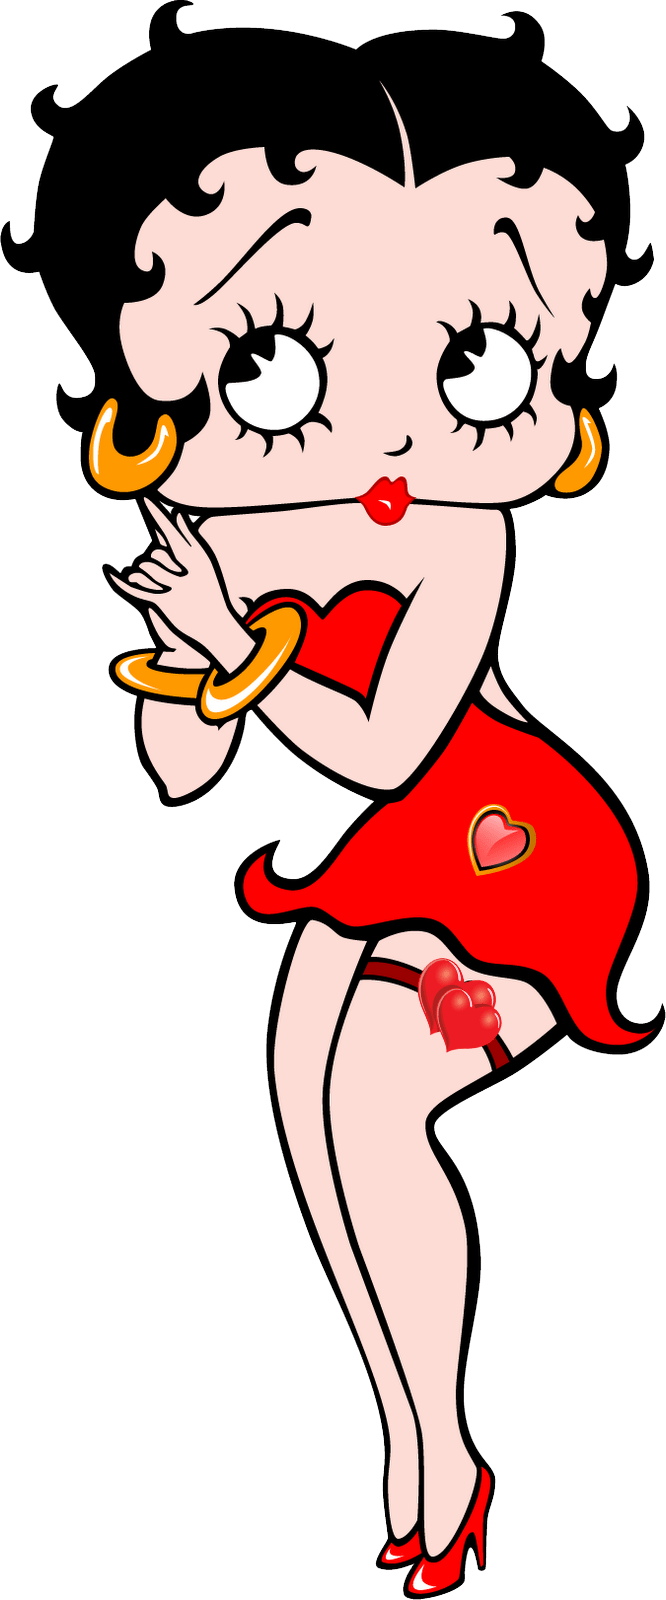 Betty Boop Cartoon PNG Transparent Image